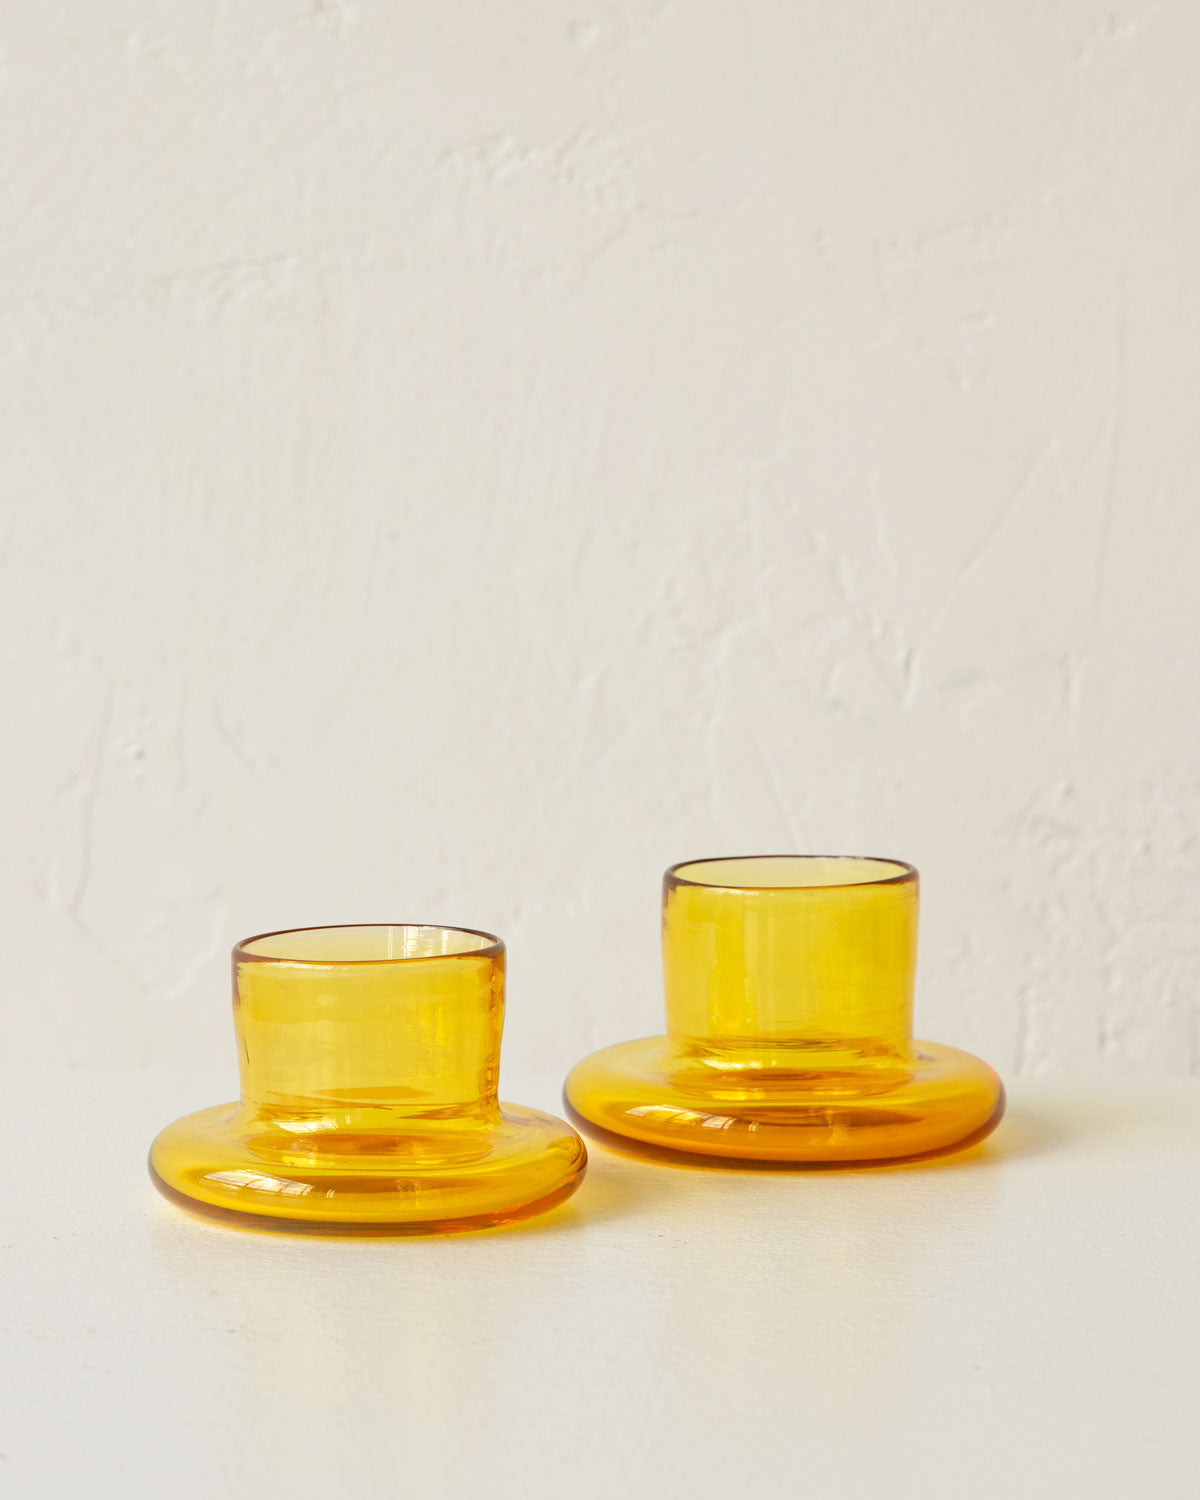 Pair of handmade yellow glass tea light holders